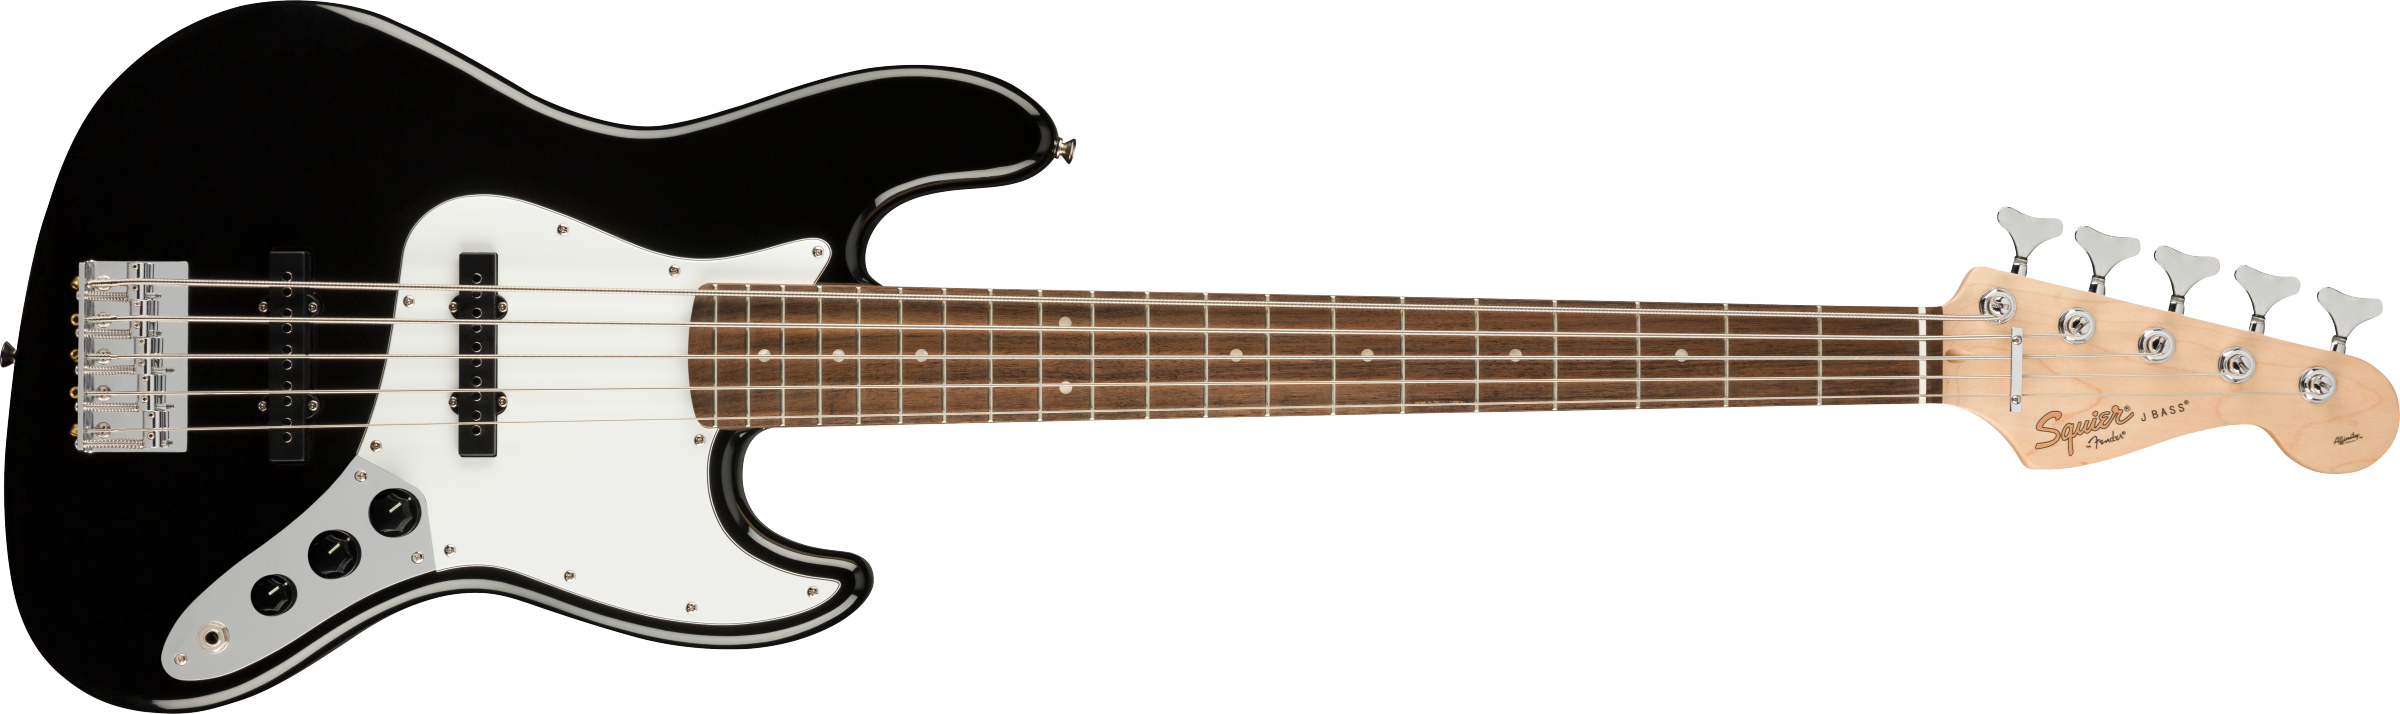 Squier Affinity Series Jazz Bass V, Black 0371575506